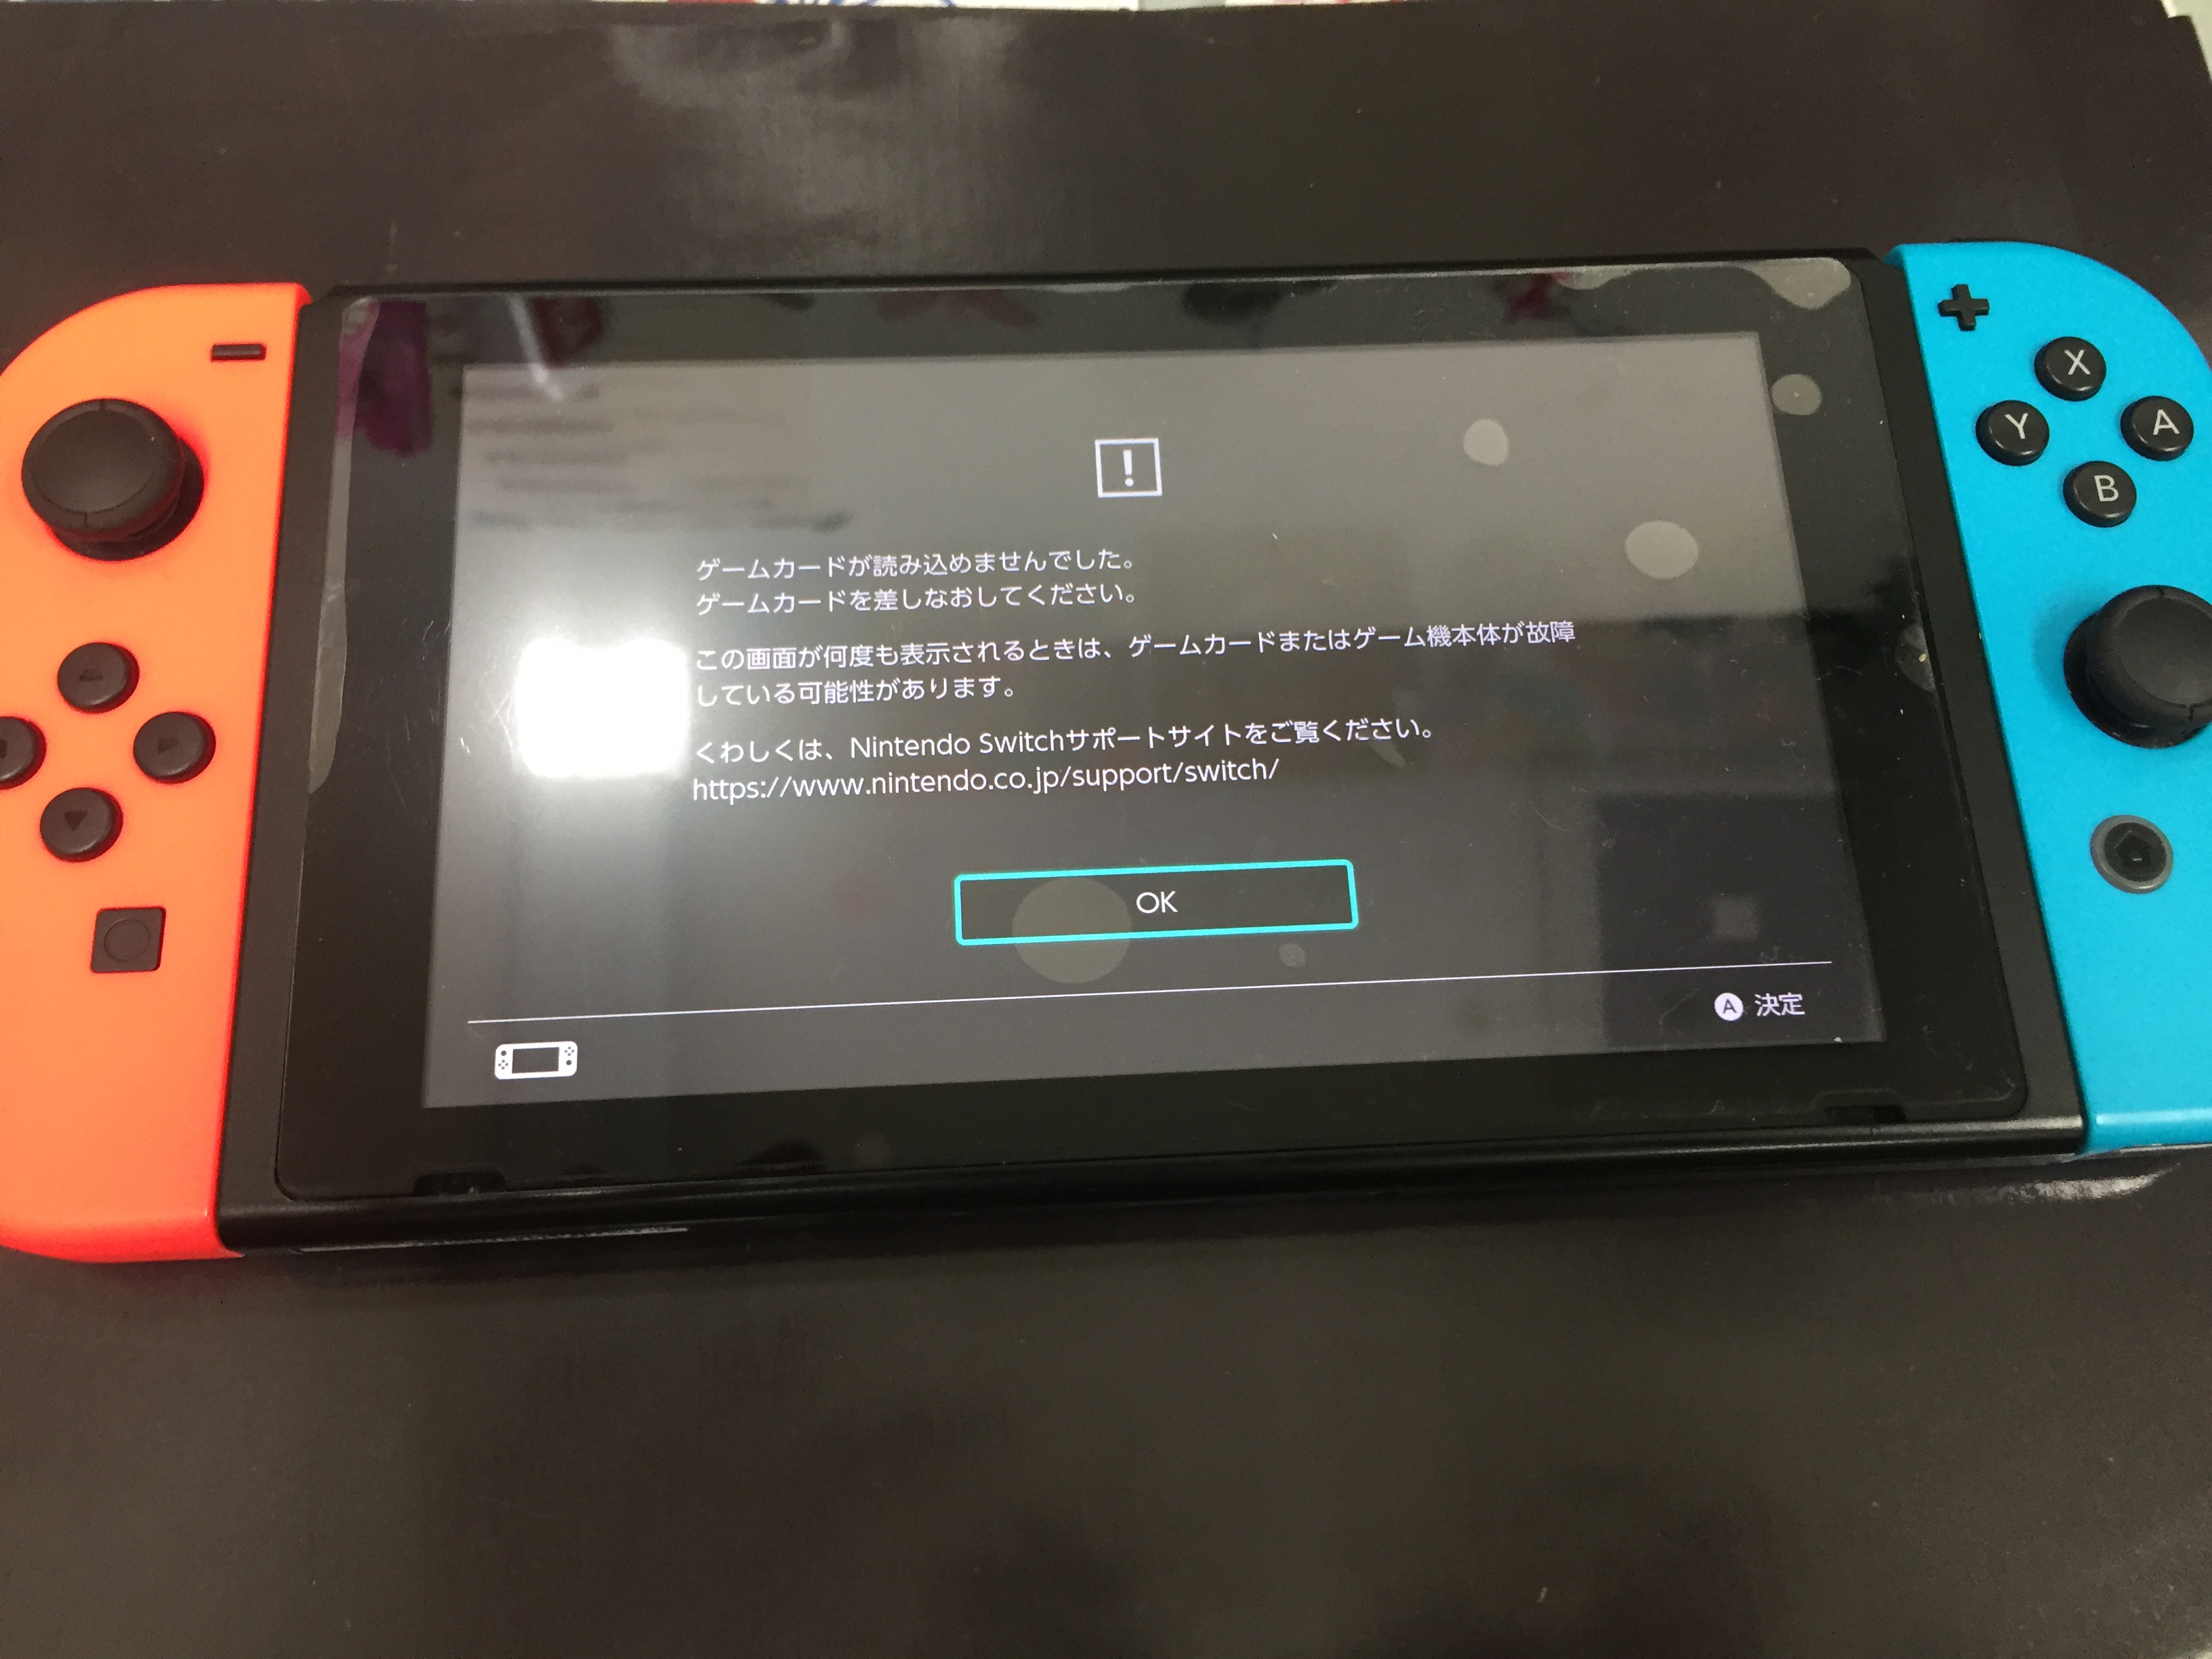 Switchのカセットが読み込めない 実は ただの 汚れ Switch Nintendo3ds Psp 修理のゲームホスピタル Switch Nintendo3ds ニンテンドーds Psp 修理